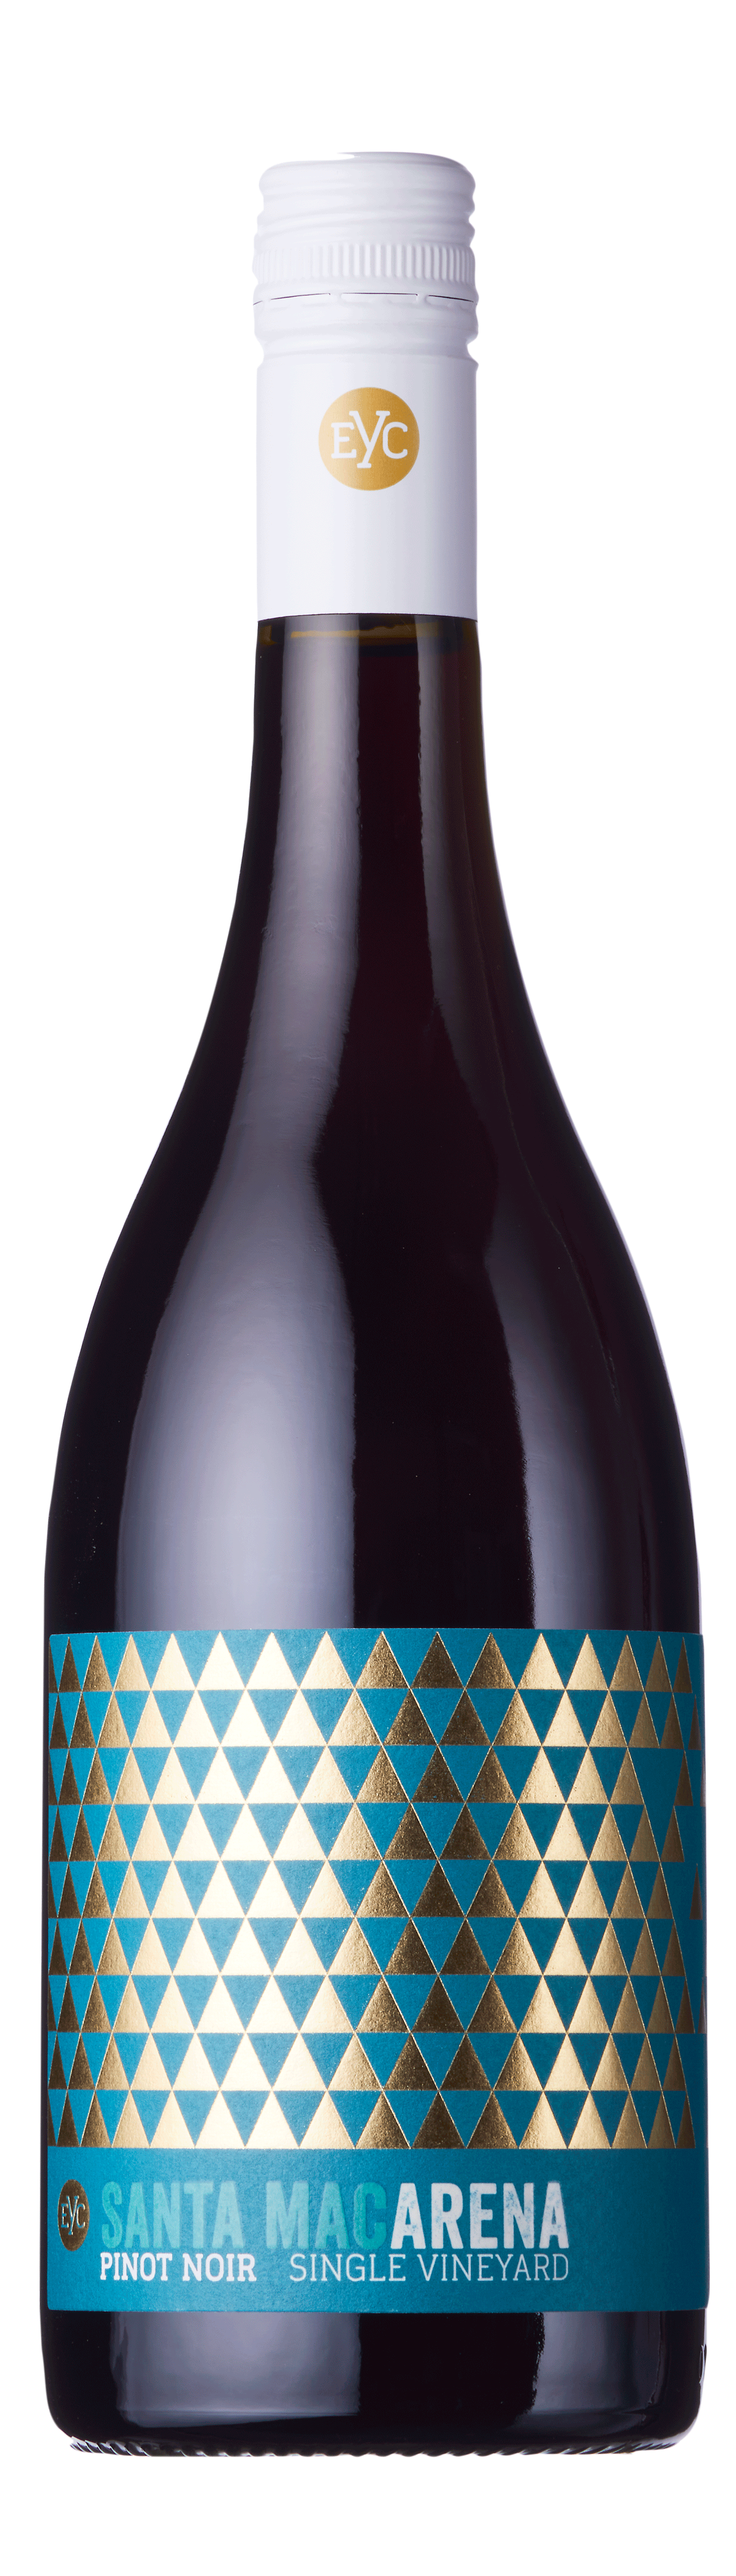 Bottle shot - Espinos y Cardos, Santa Macarena Single Vineyard Pinot Noir, Aconcagua, Chile